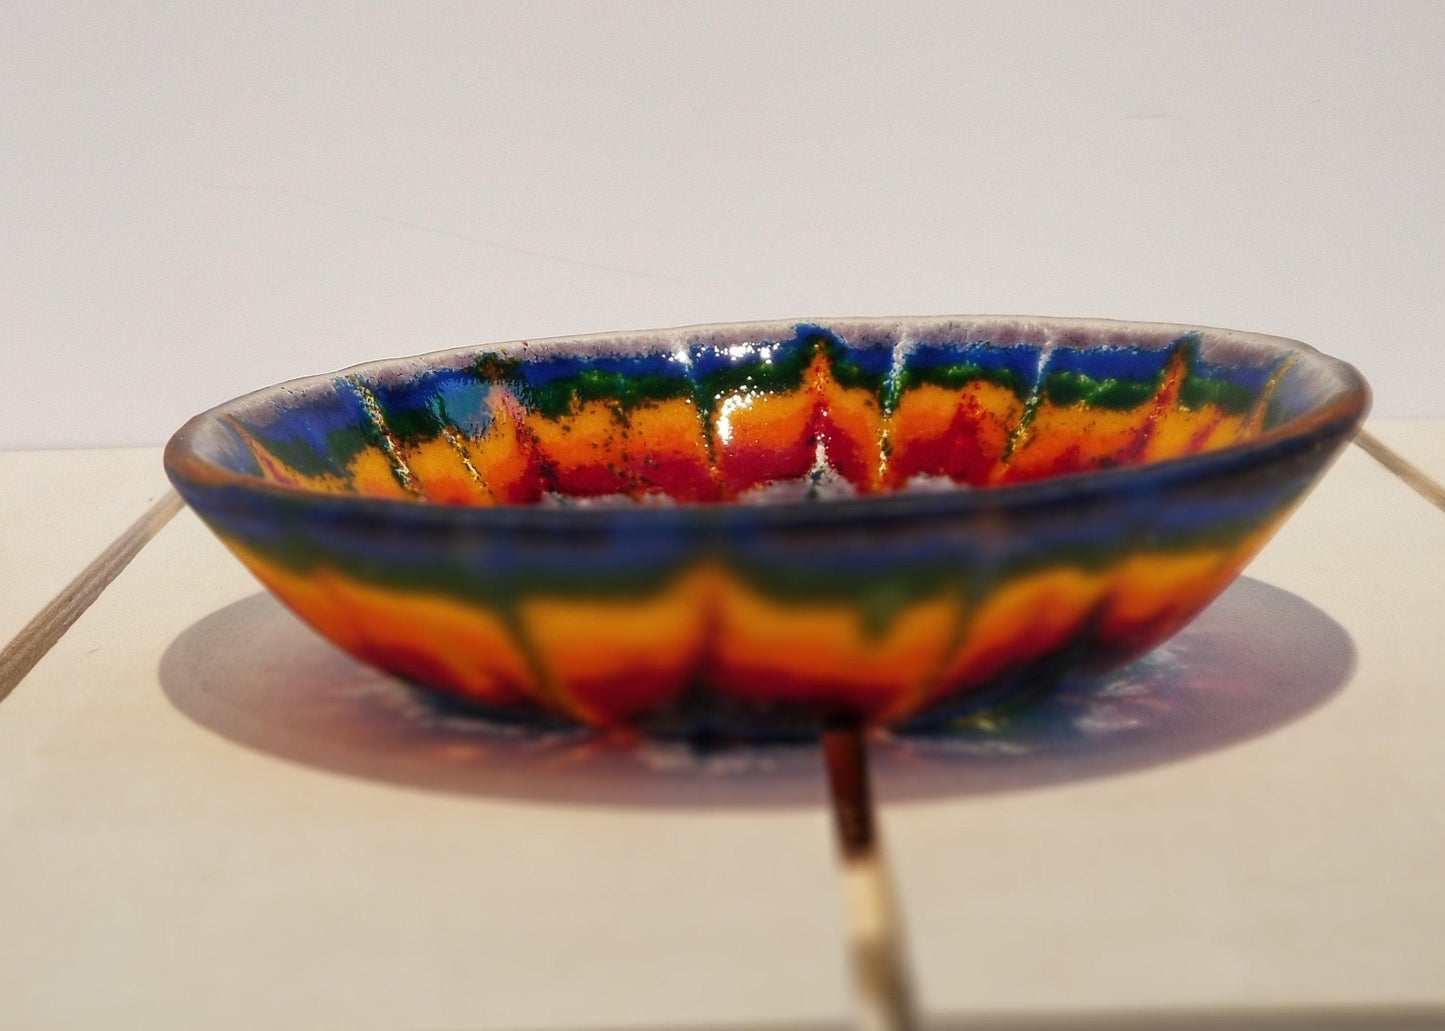 5 inch tie dye look fused glass bowl, vivid rainbow colors